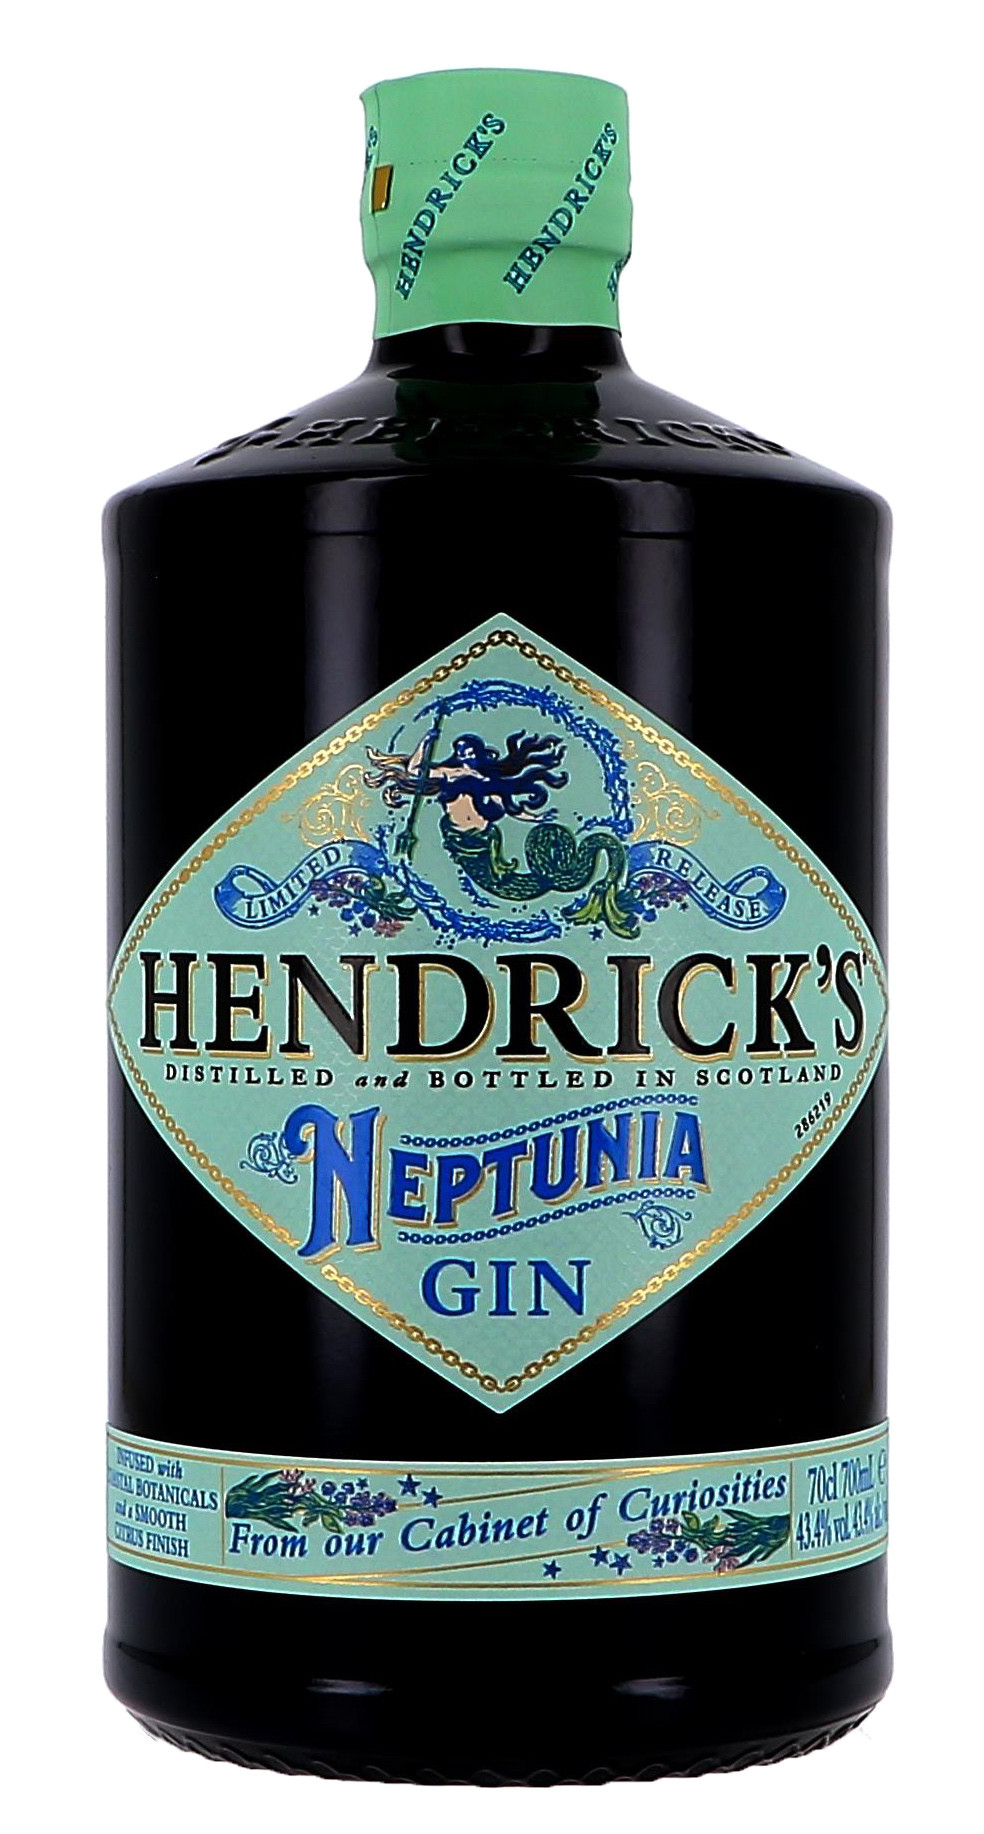 Gin Hendrick's Orbium 70cl 43.4% Limited Release